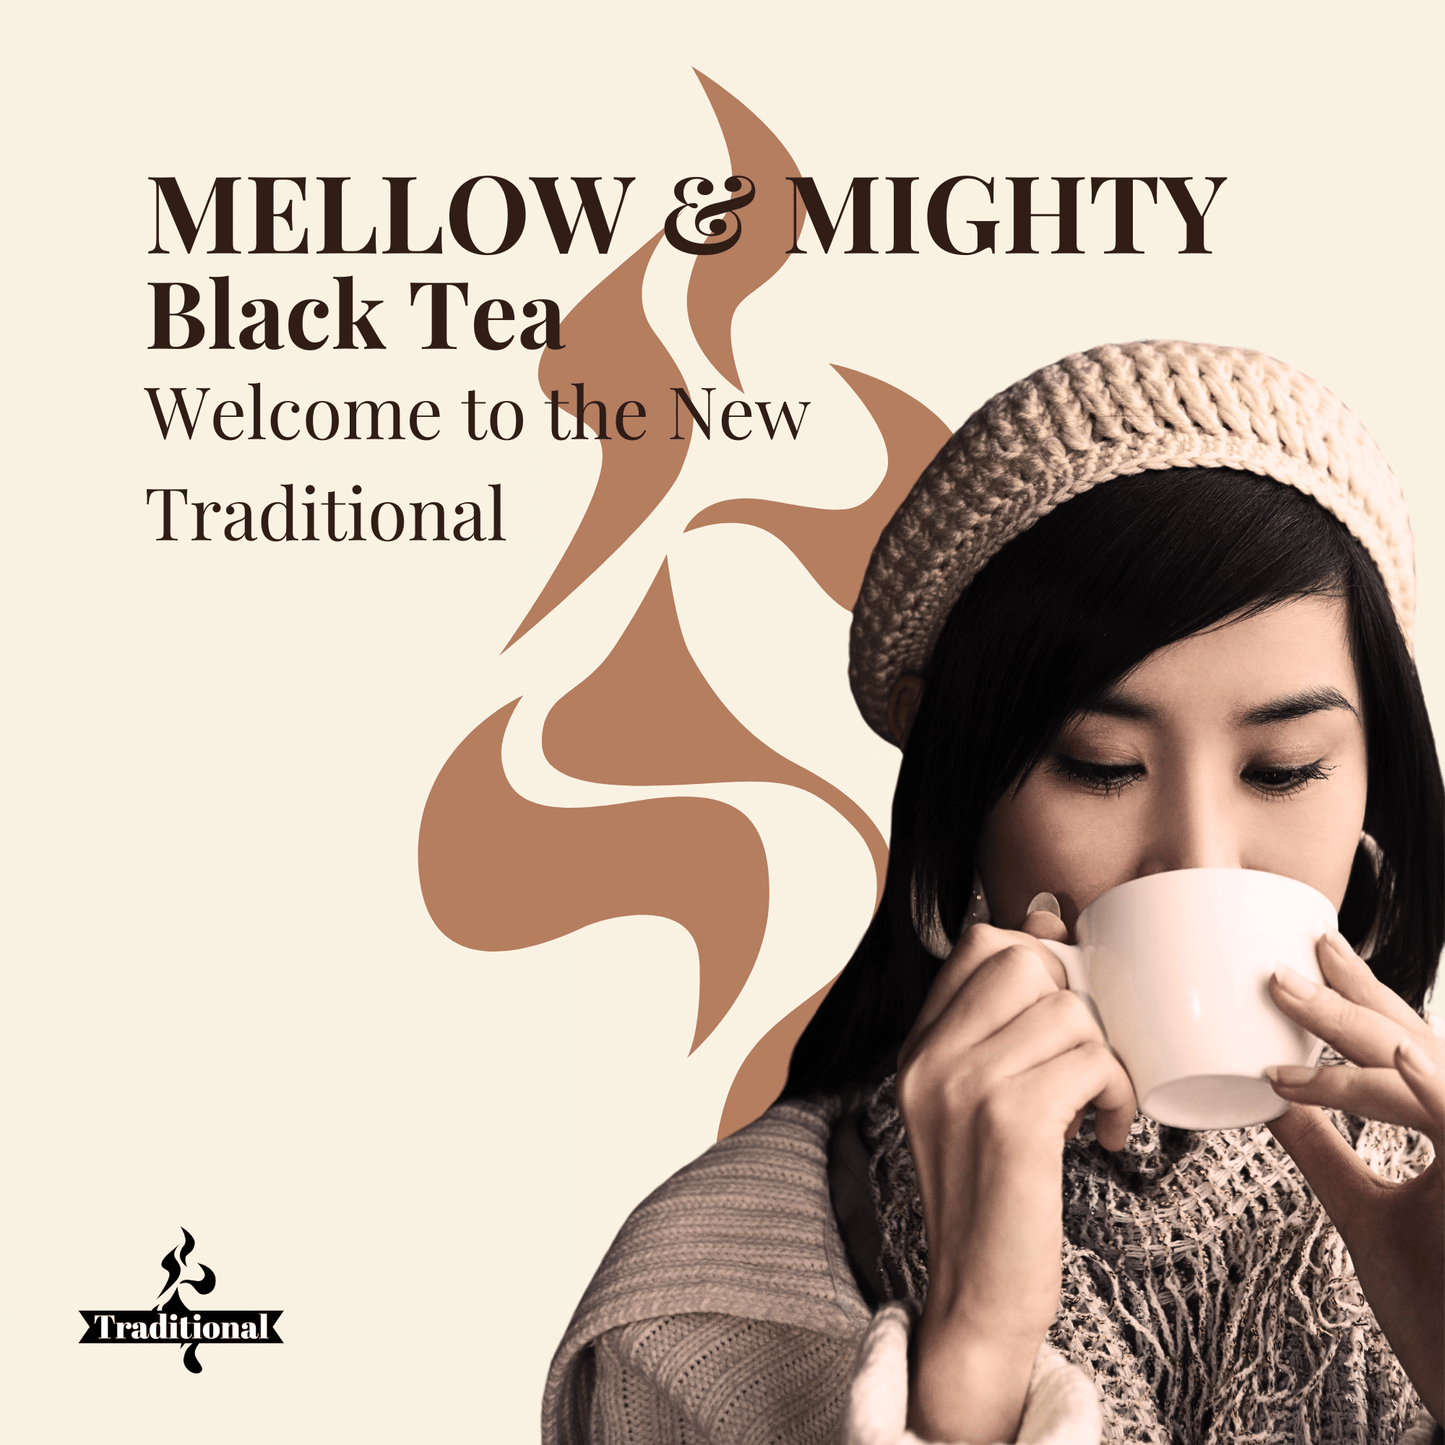 Mellow & Mighty. Black Tea. Details ->